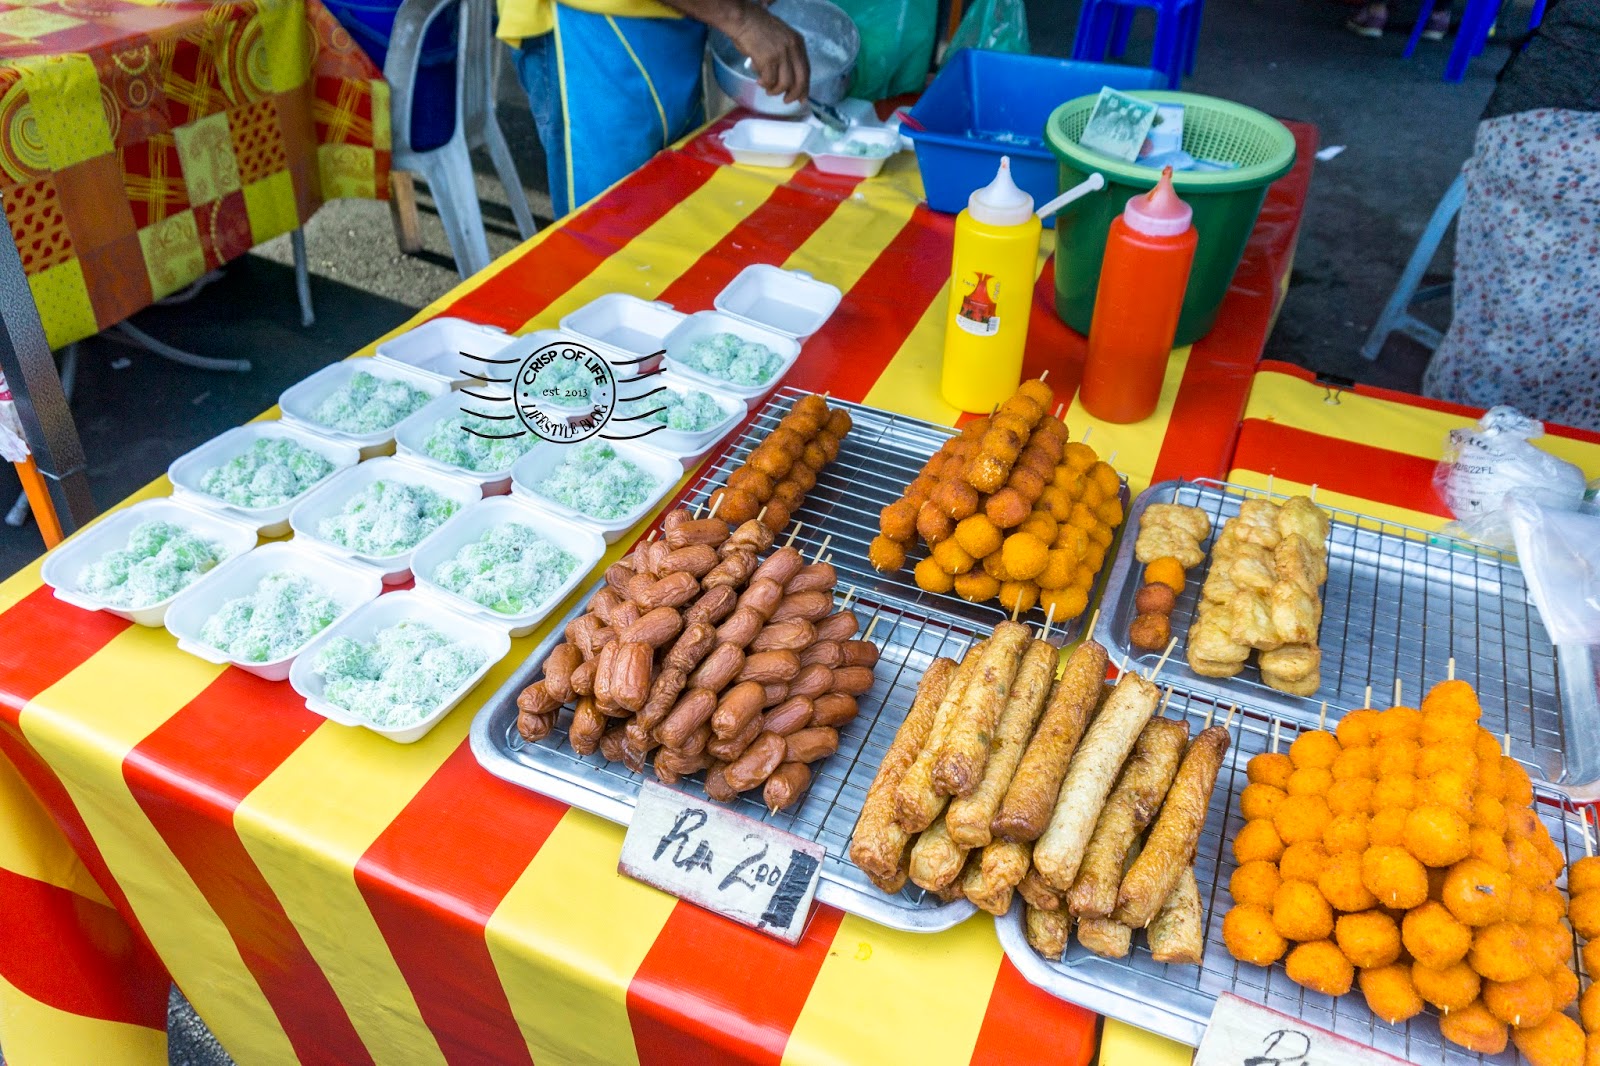 Bazaar Ramadan in Perlis